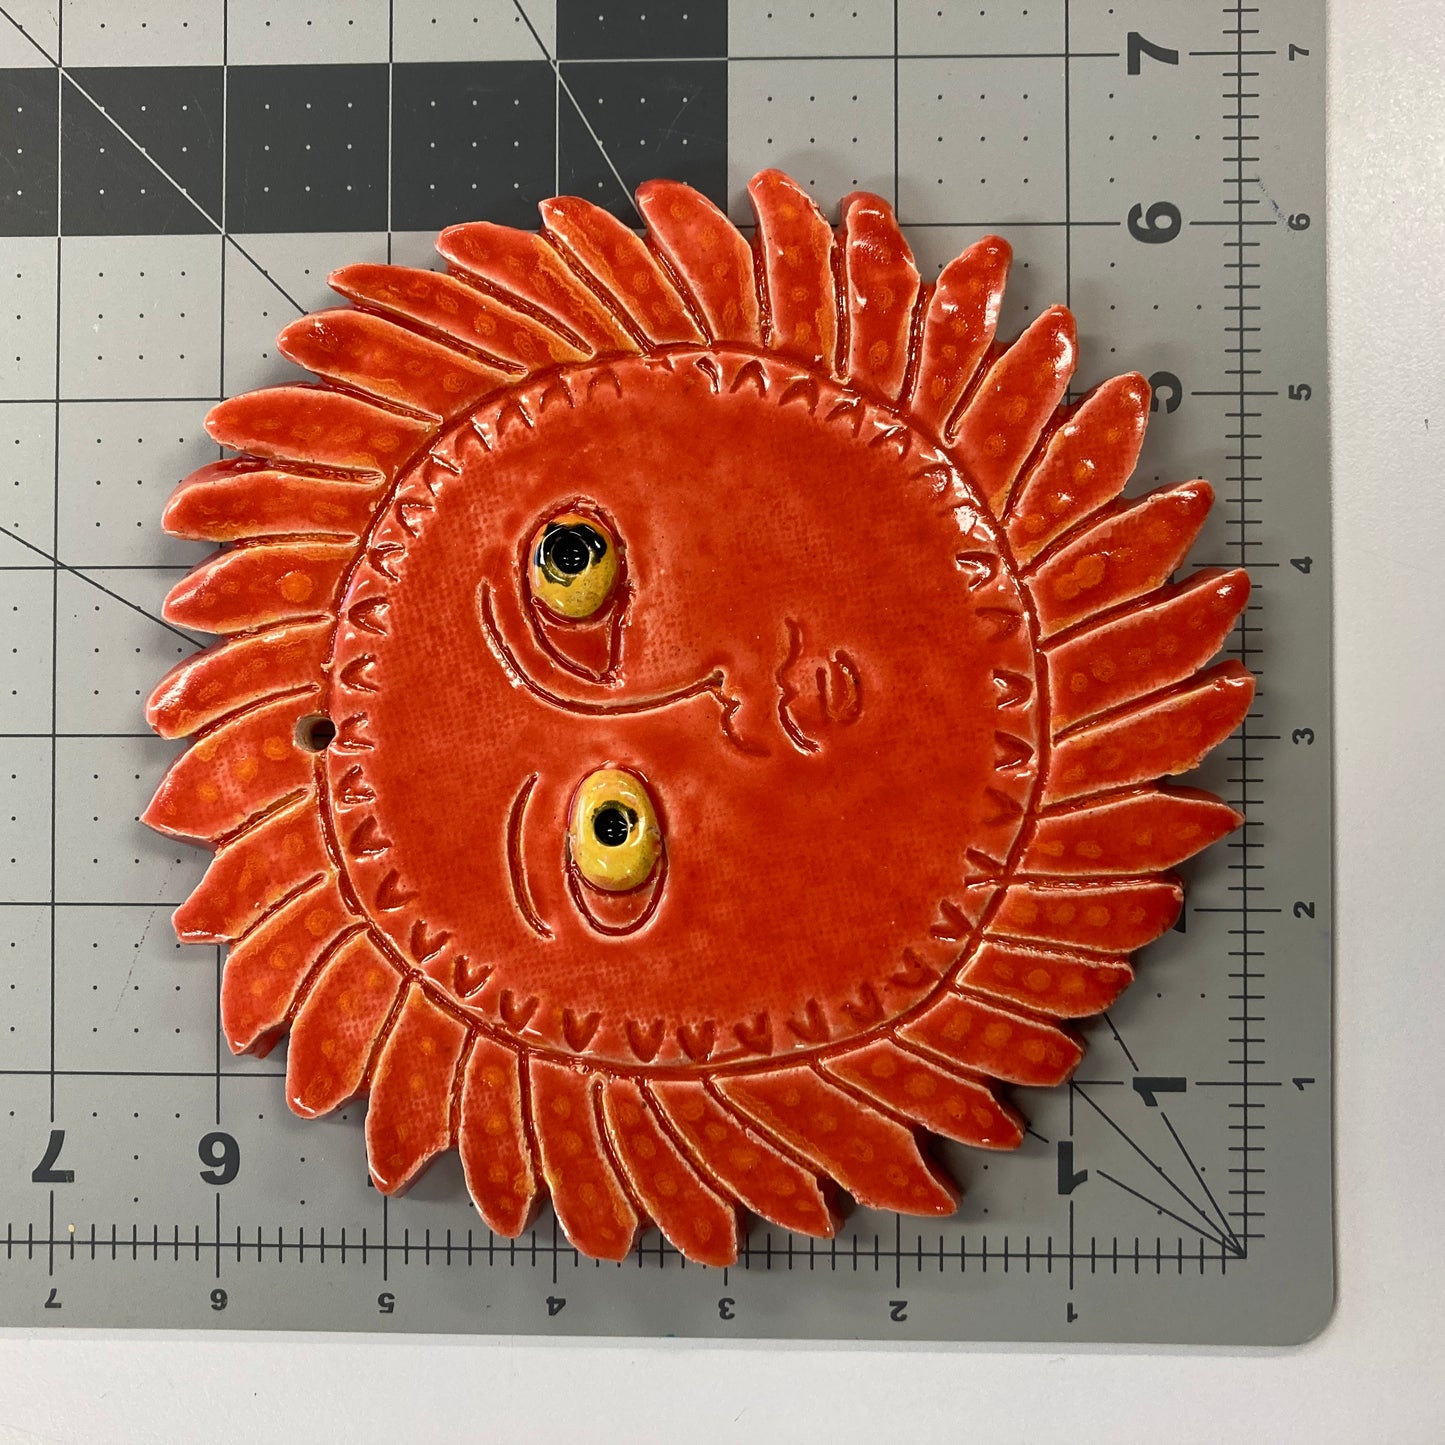 Ceramic Arts Handmade Clay Crafts 6.5-inch x 6.5-inch Glazed Sun made by Lisa Uptain